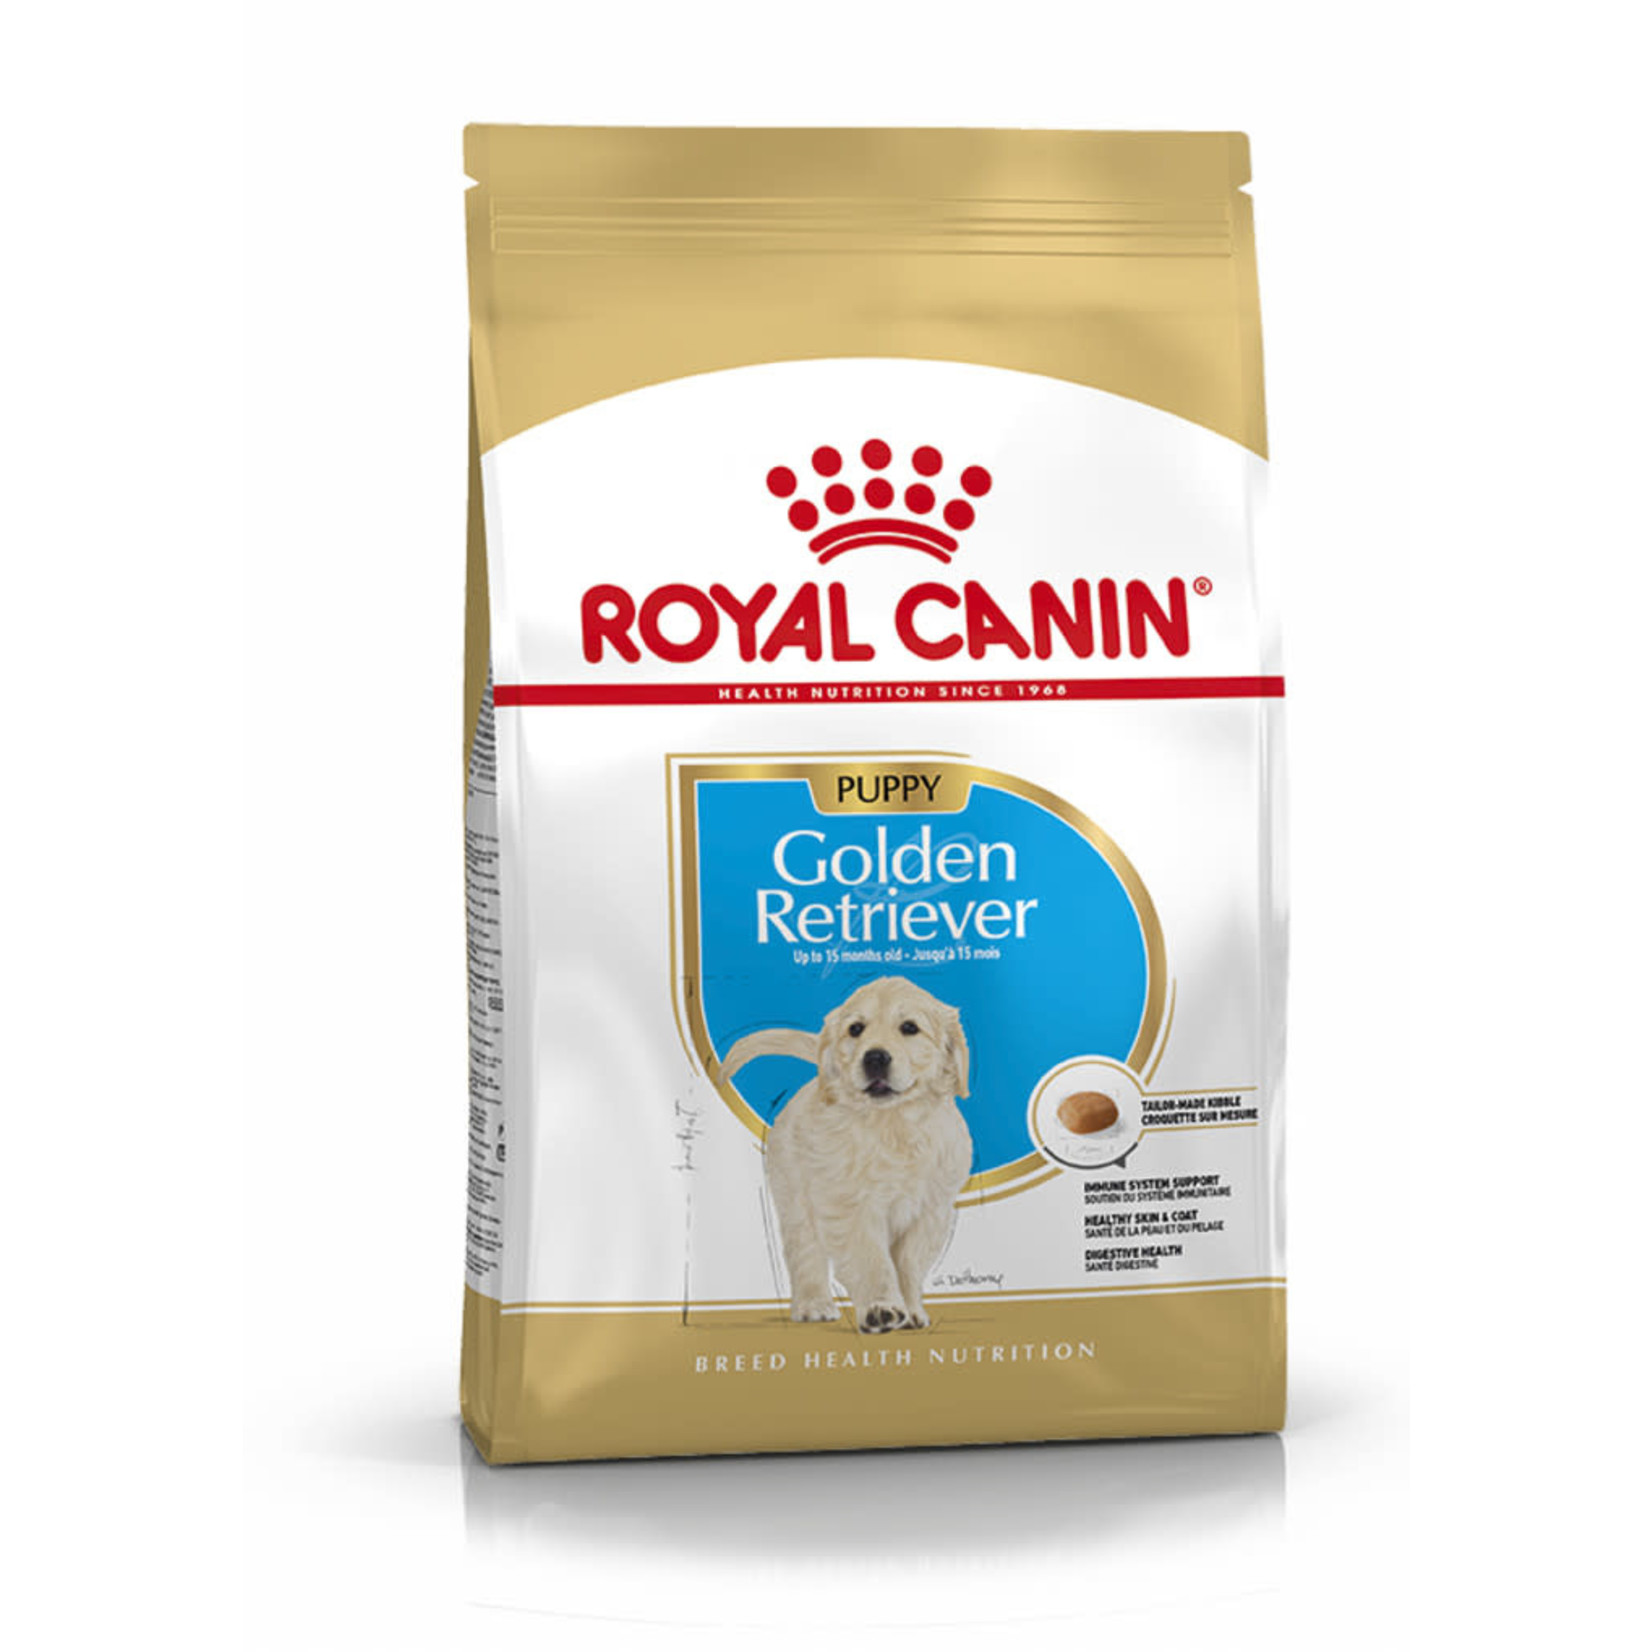 Royal Canin Golden Retriever Puppy Dry Food